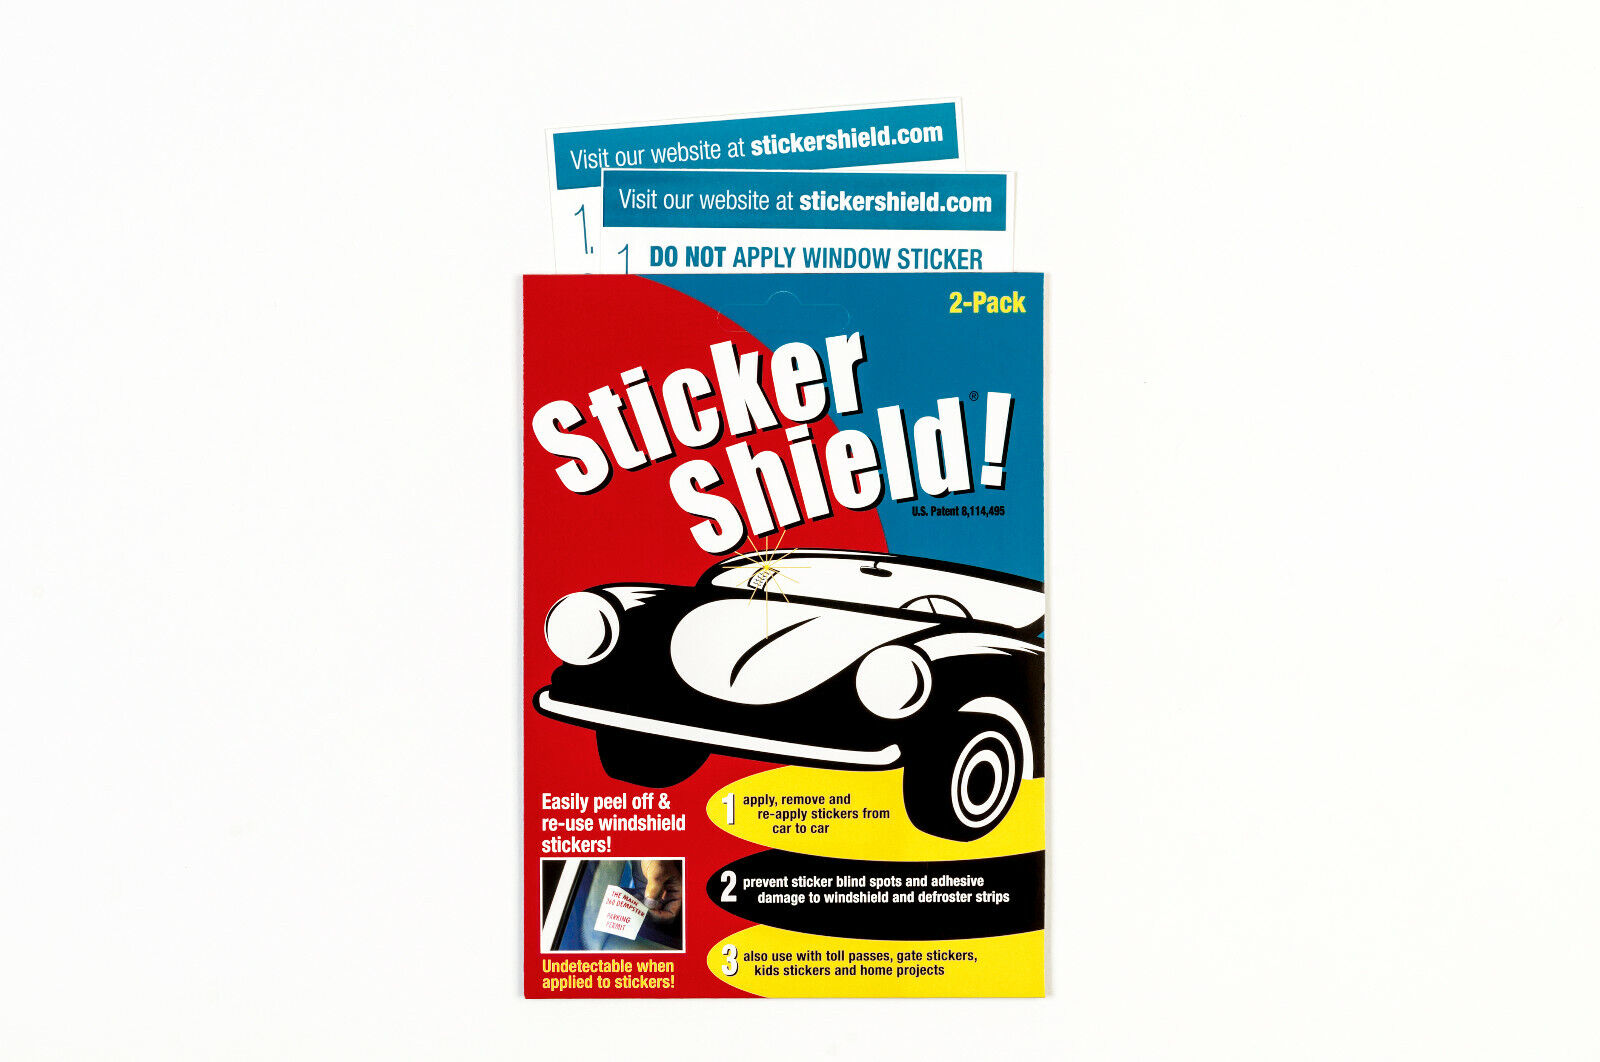 Sticker Shield - Windshield Sticker Applicator For Application, Removal & Re-app